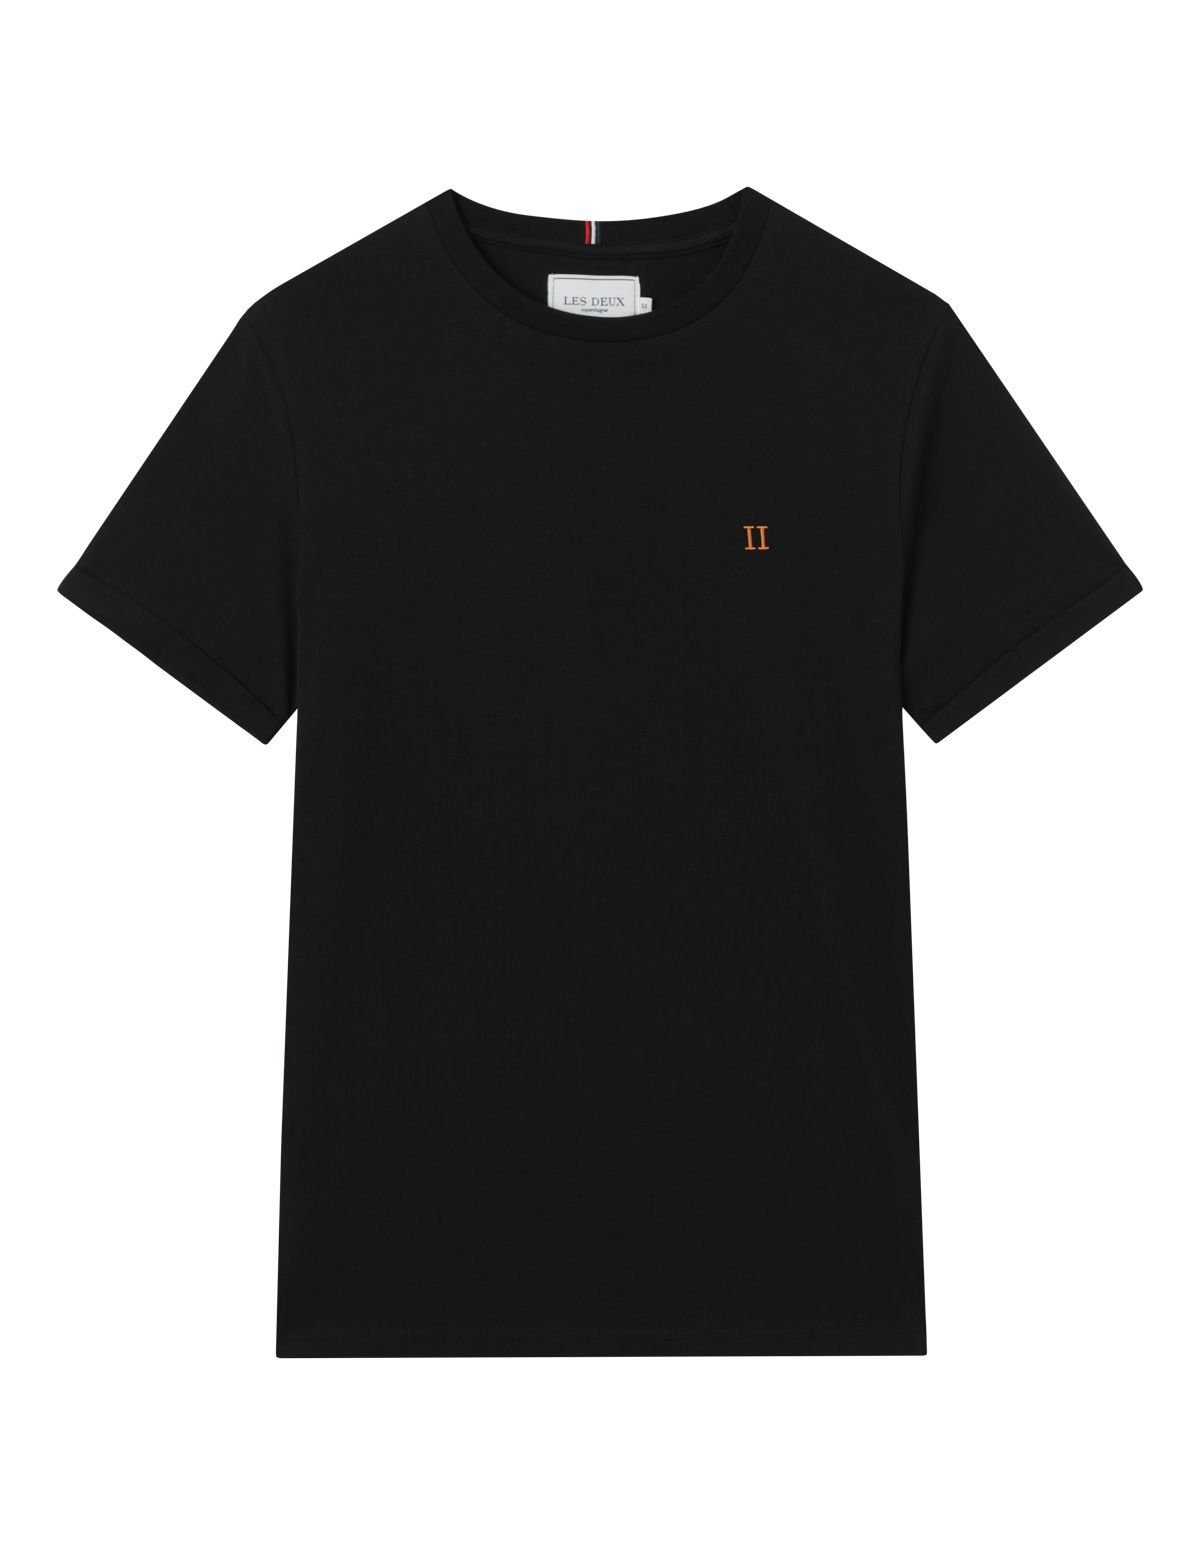 Les Deux T-Shirt reine Bauumwolle, atmungsaktiv 0101-Black